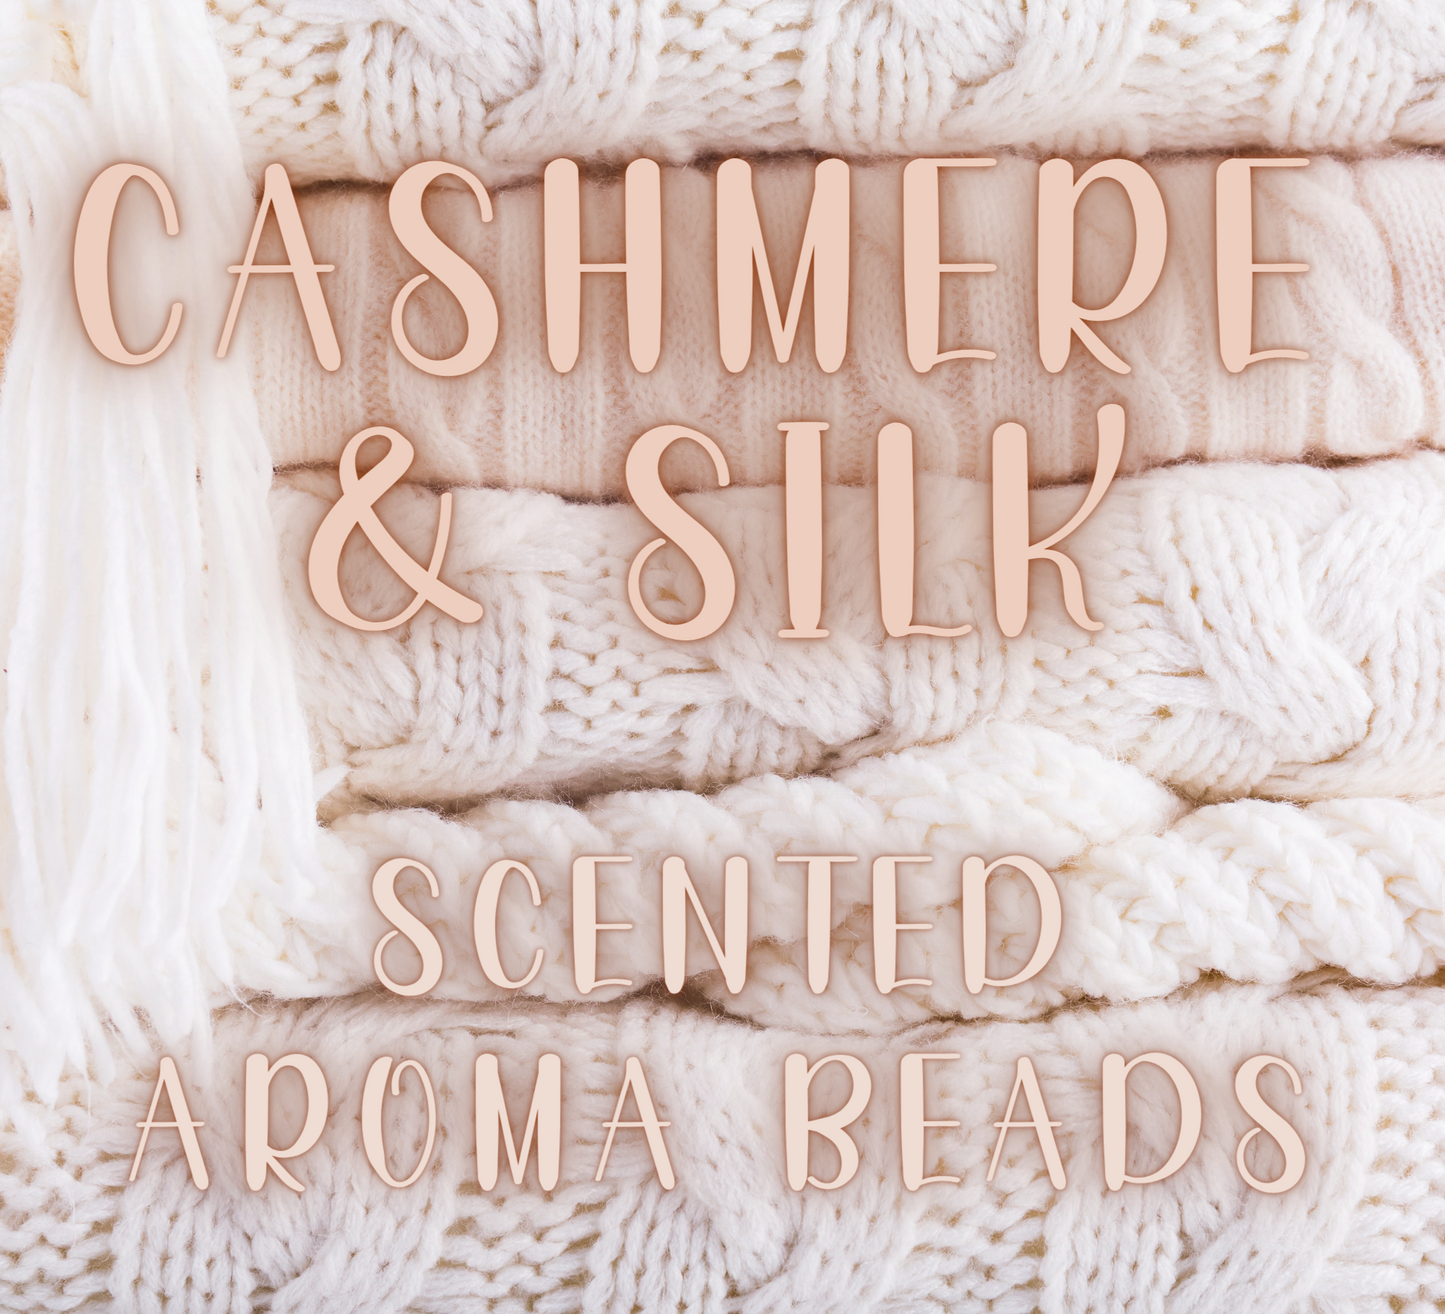 Cashmere & Silk Premium Scented Beads